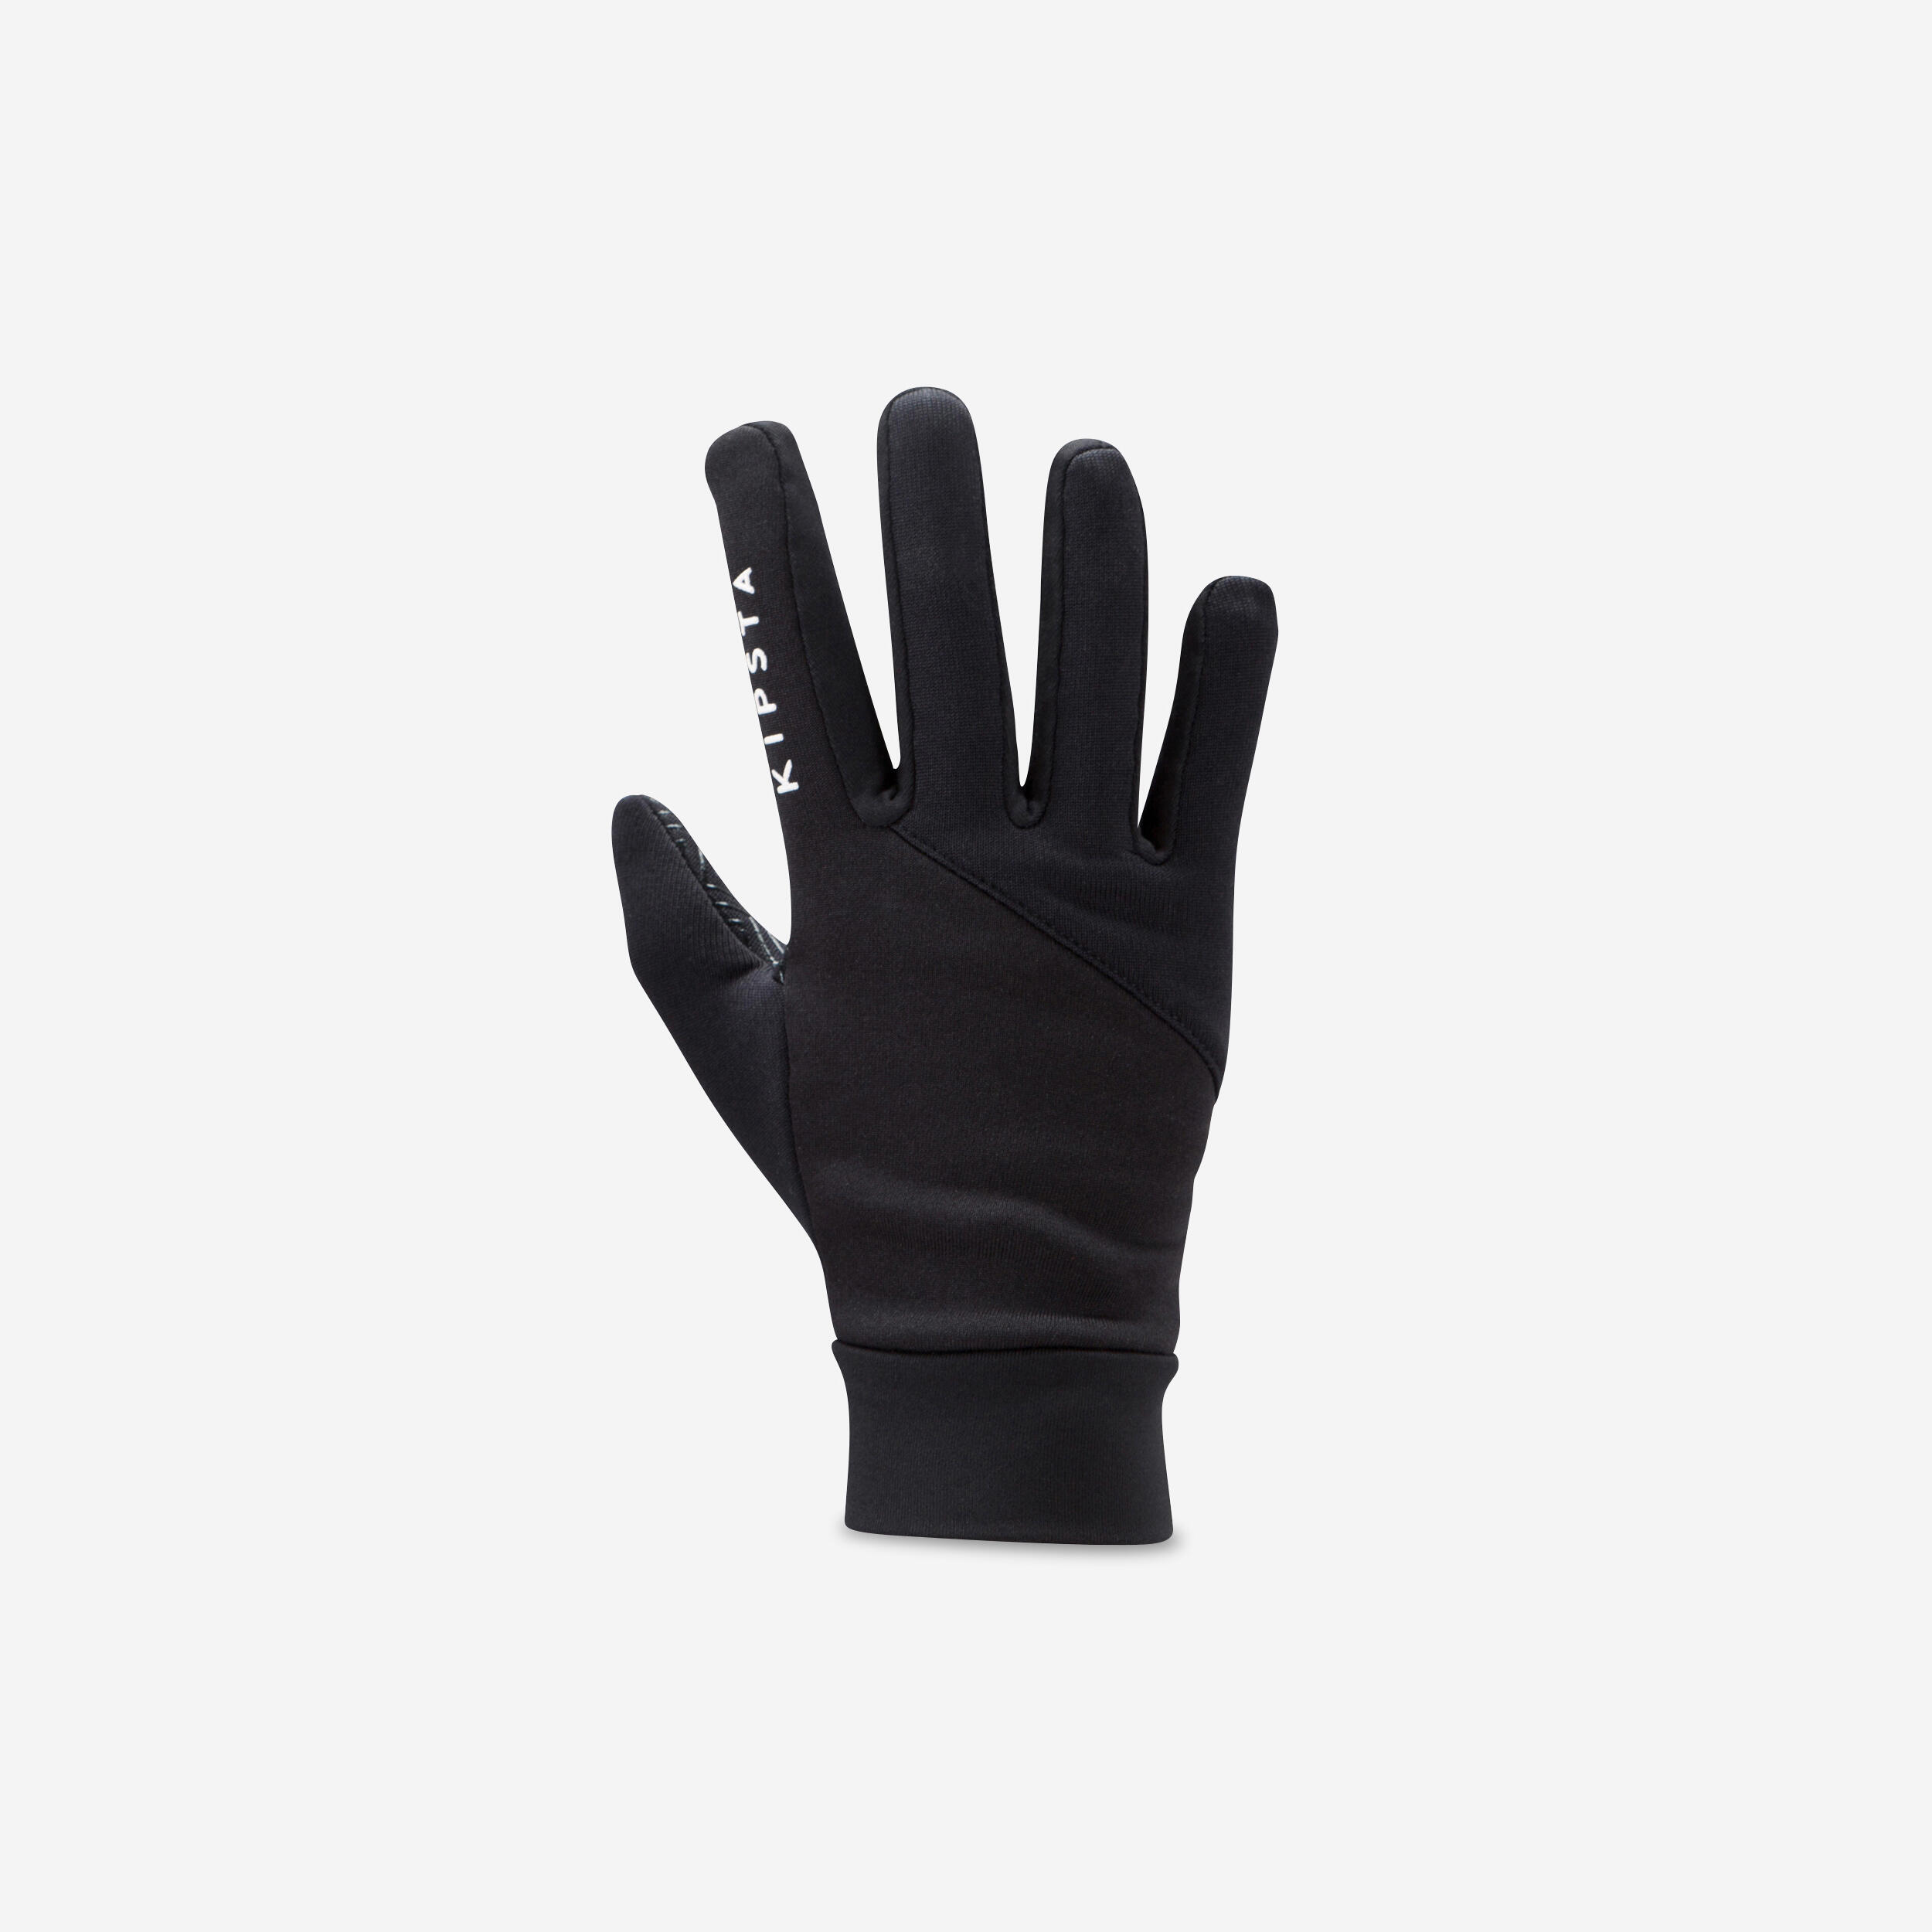 Kids' Soccer Gloves - Keepdry 500 - black, black - Kipsta - Decathlon